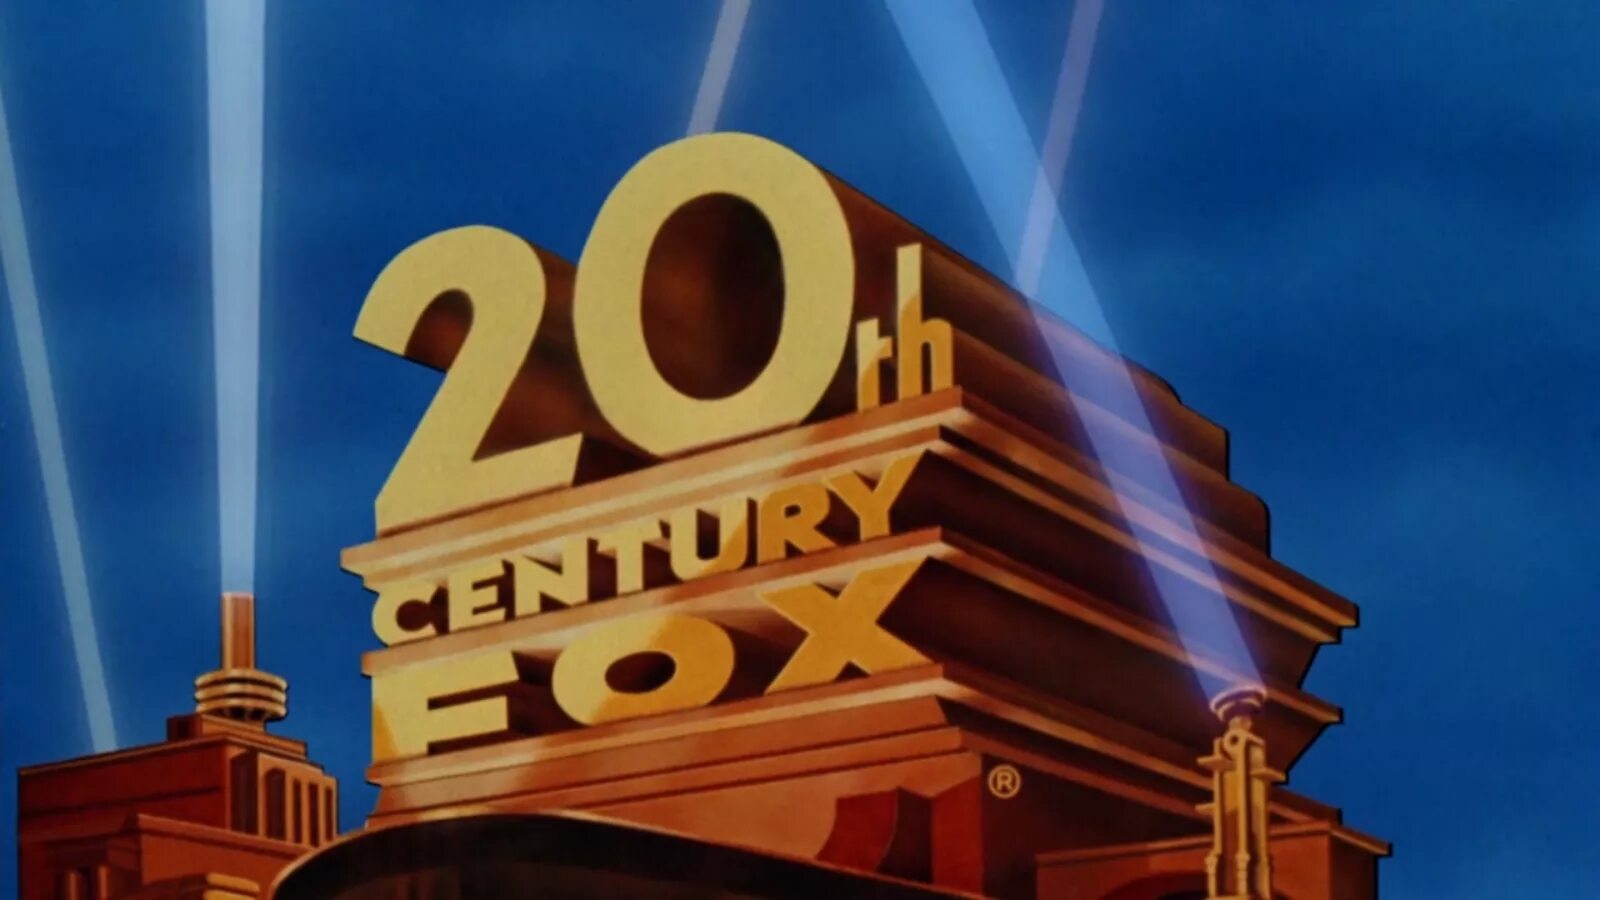 20 Век Фокс телевизион. 20th Century Fox 1987. Студия 20 век Фокс в Лос Анджелесе. 20th Century Fox 1993. 20 th century